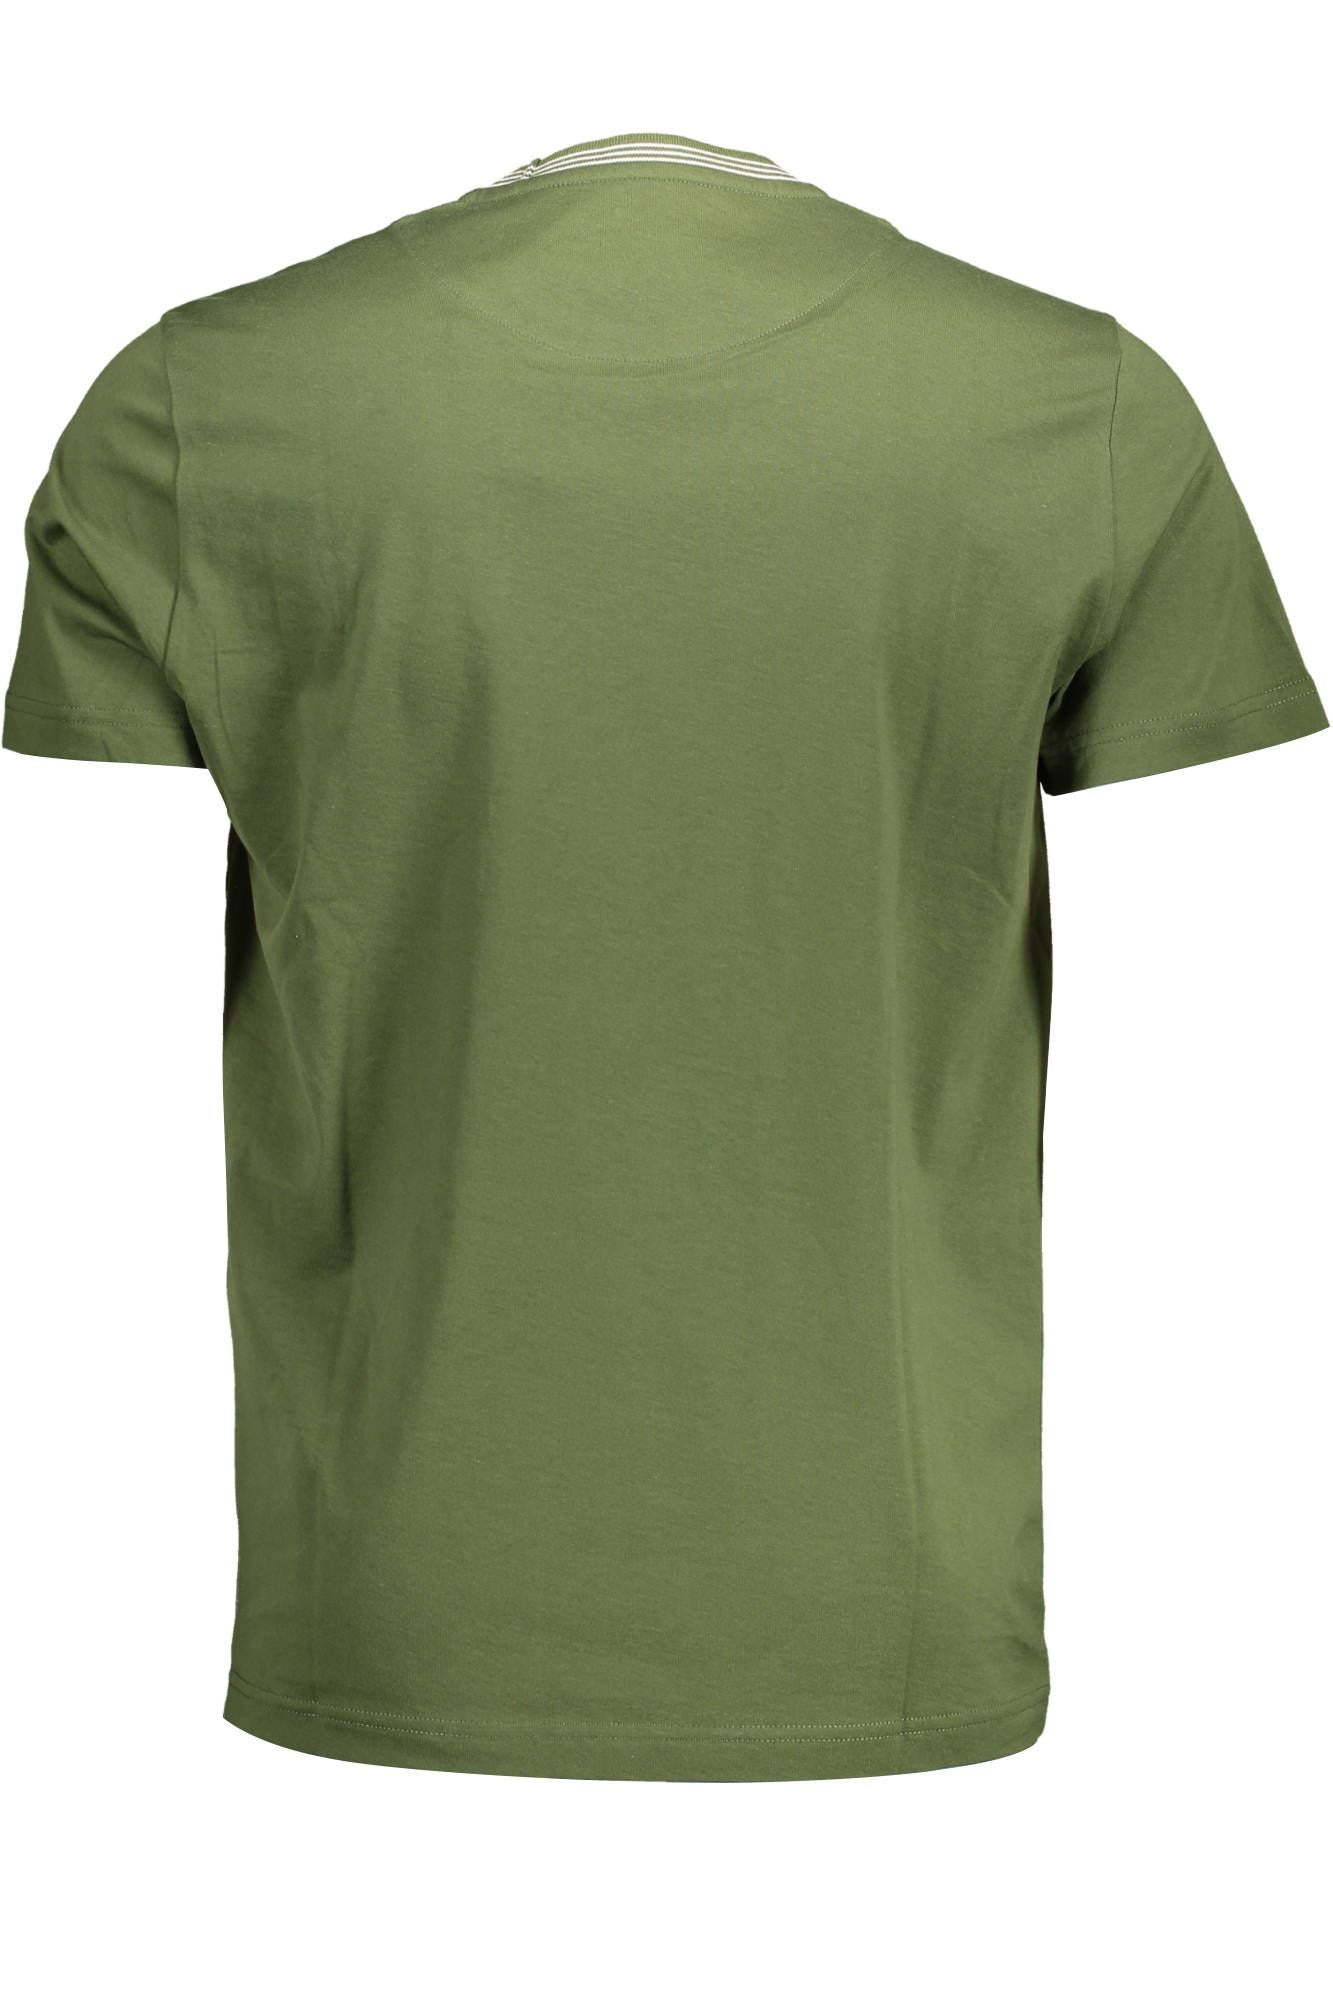 Harmont & Blaine Green Cotton T-Shirt